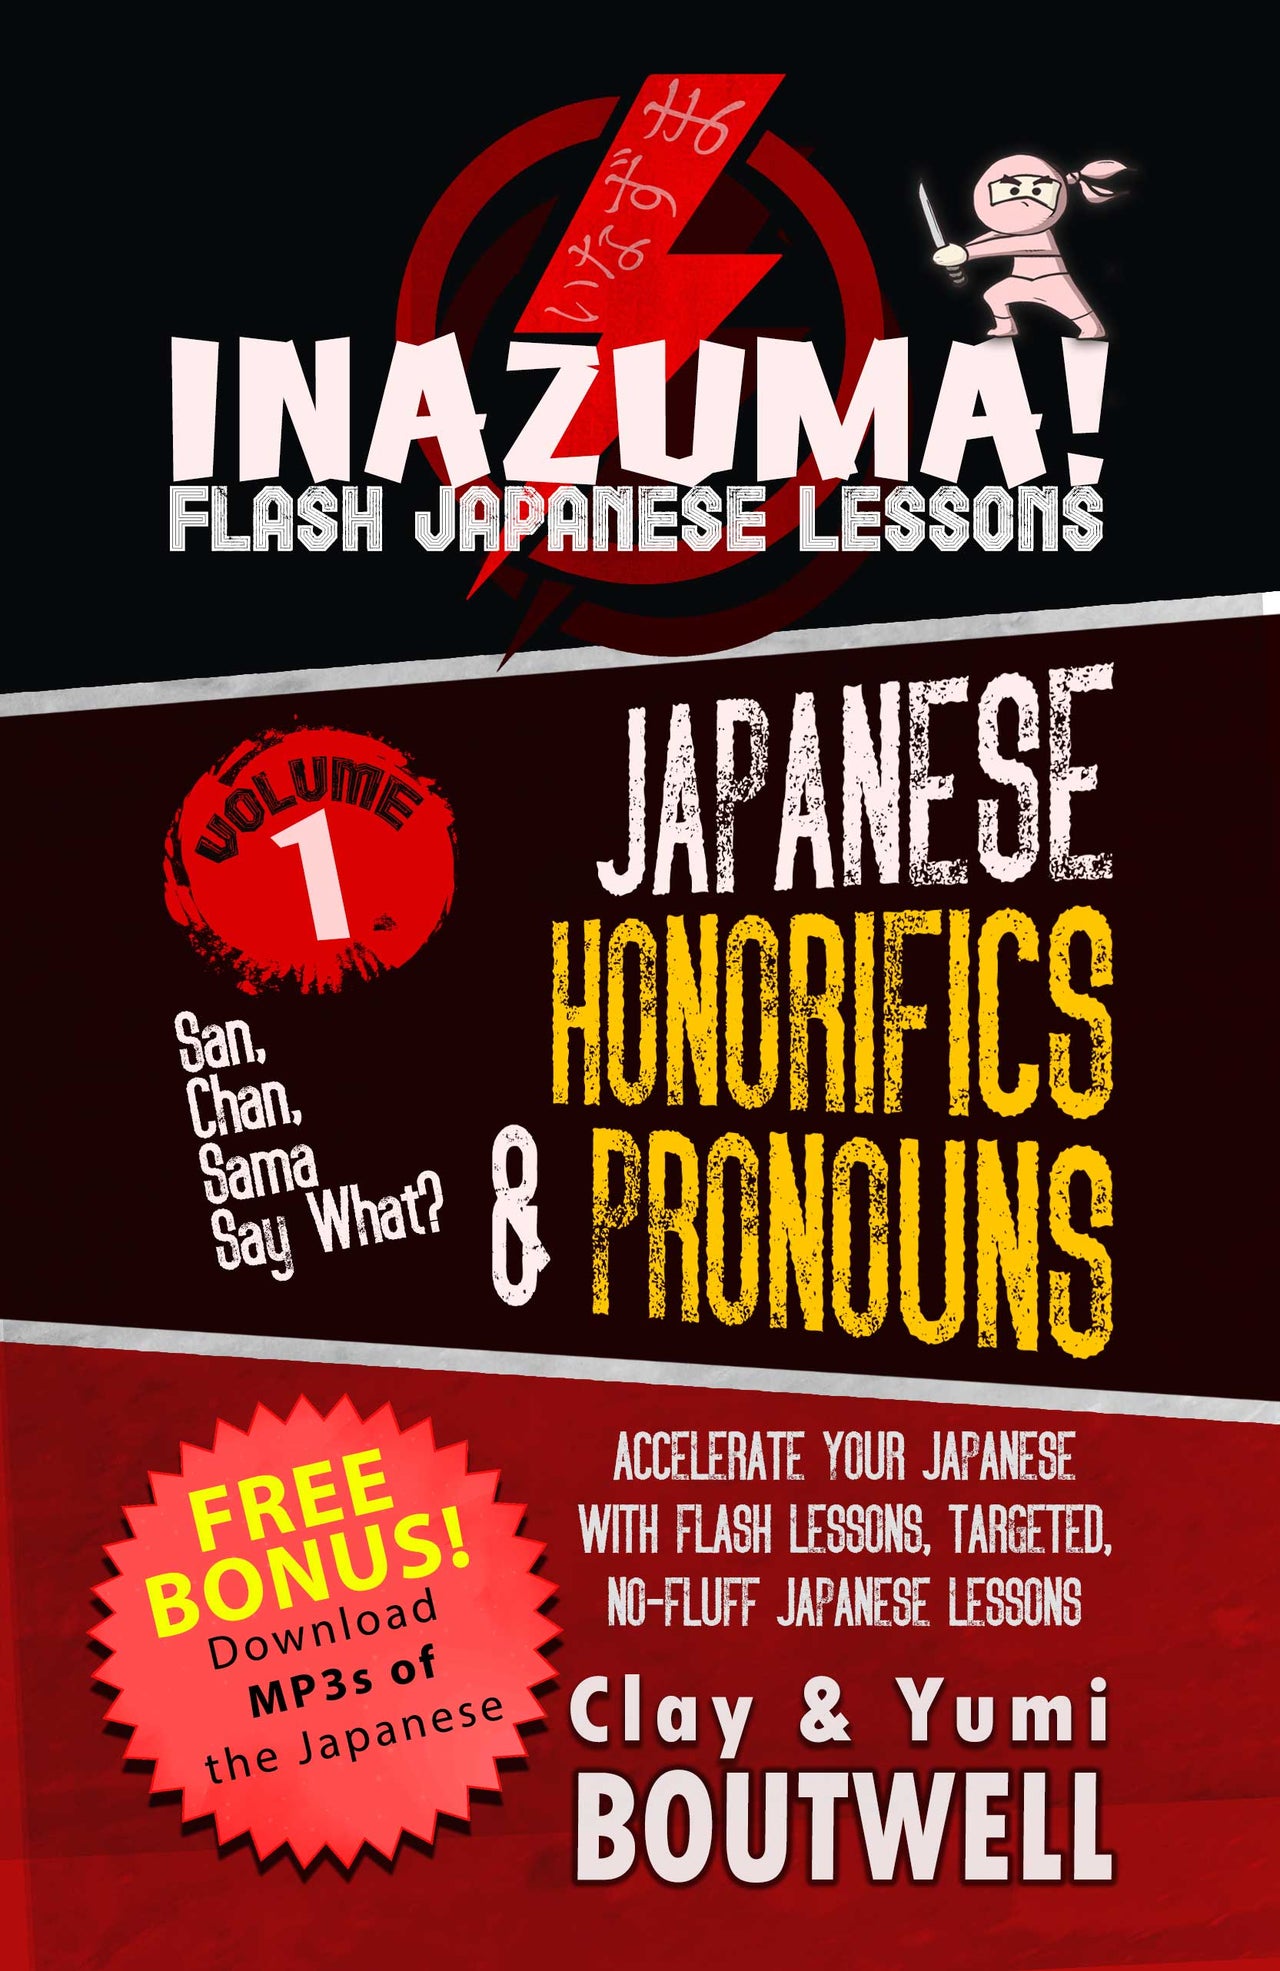 Inazuma #1: Japanese Honorifics & Pronouns - San, Chan, Sama, Say What? - The Japan Shop